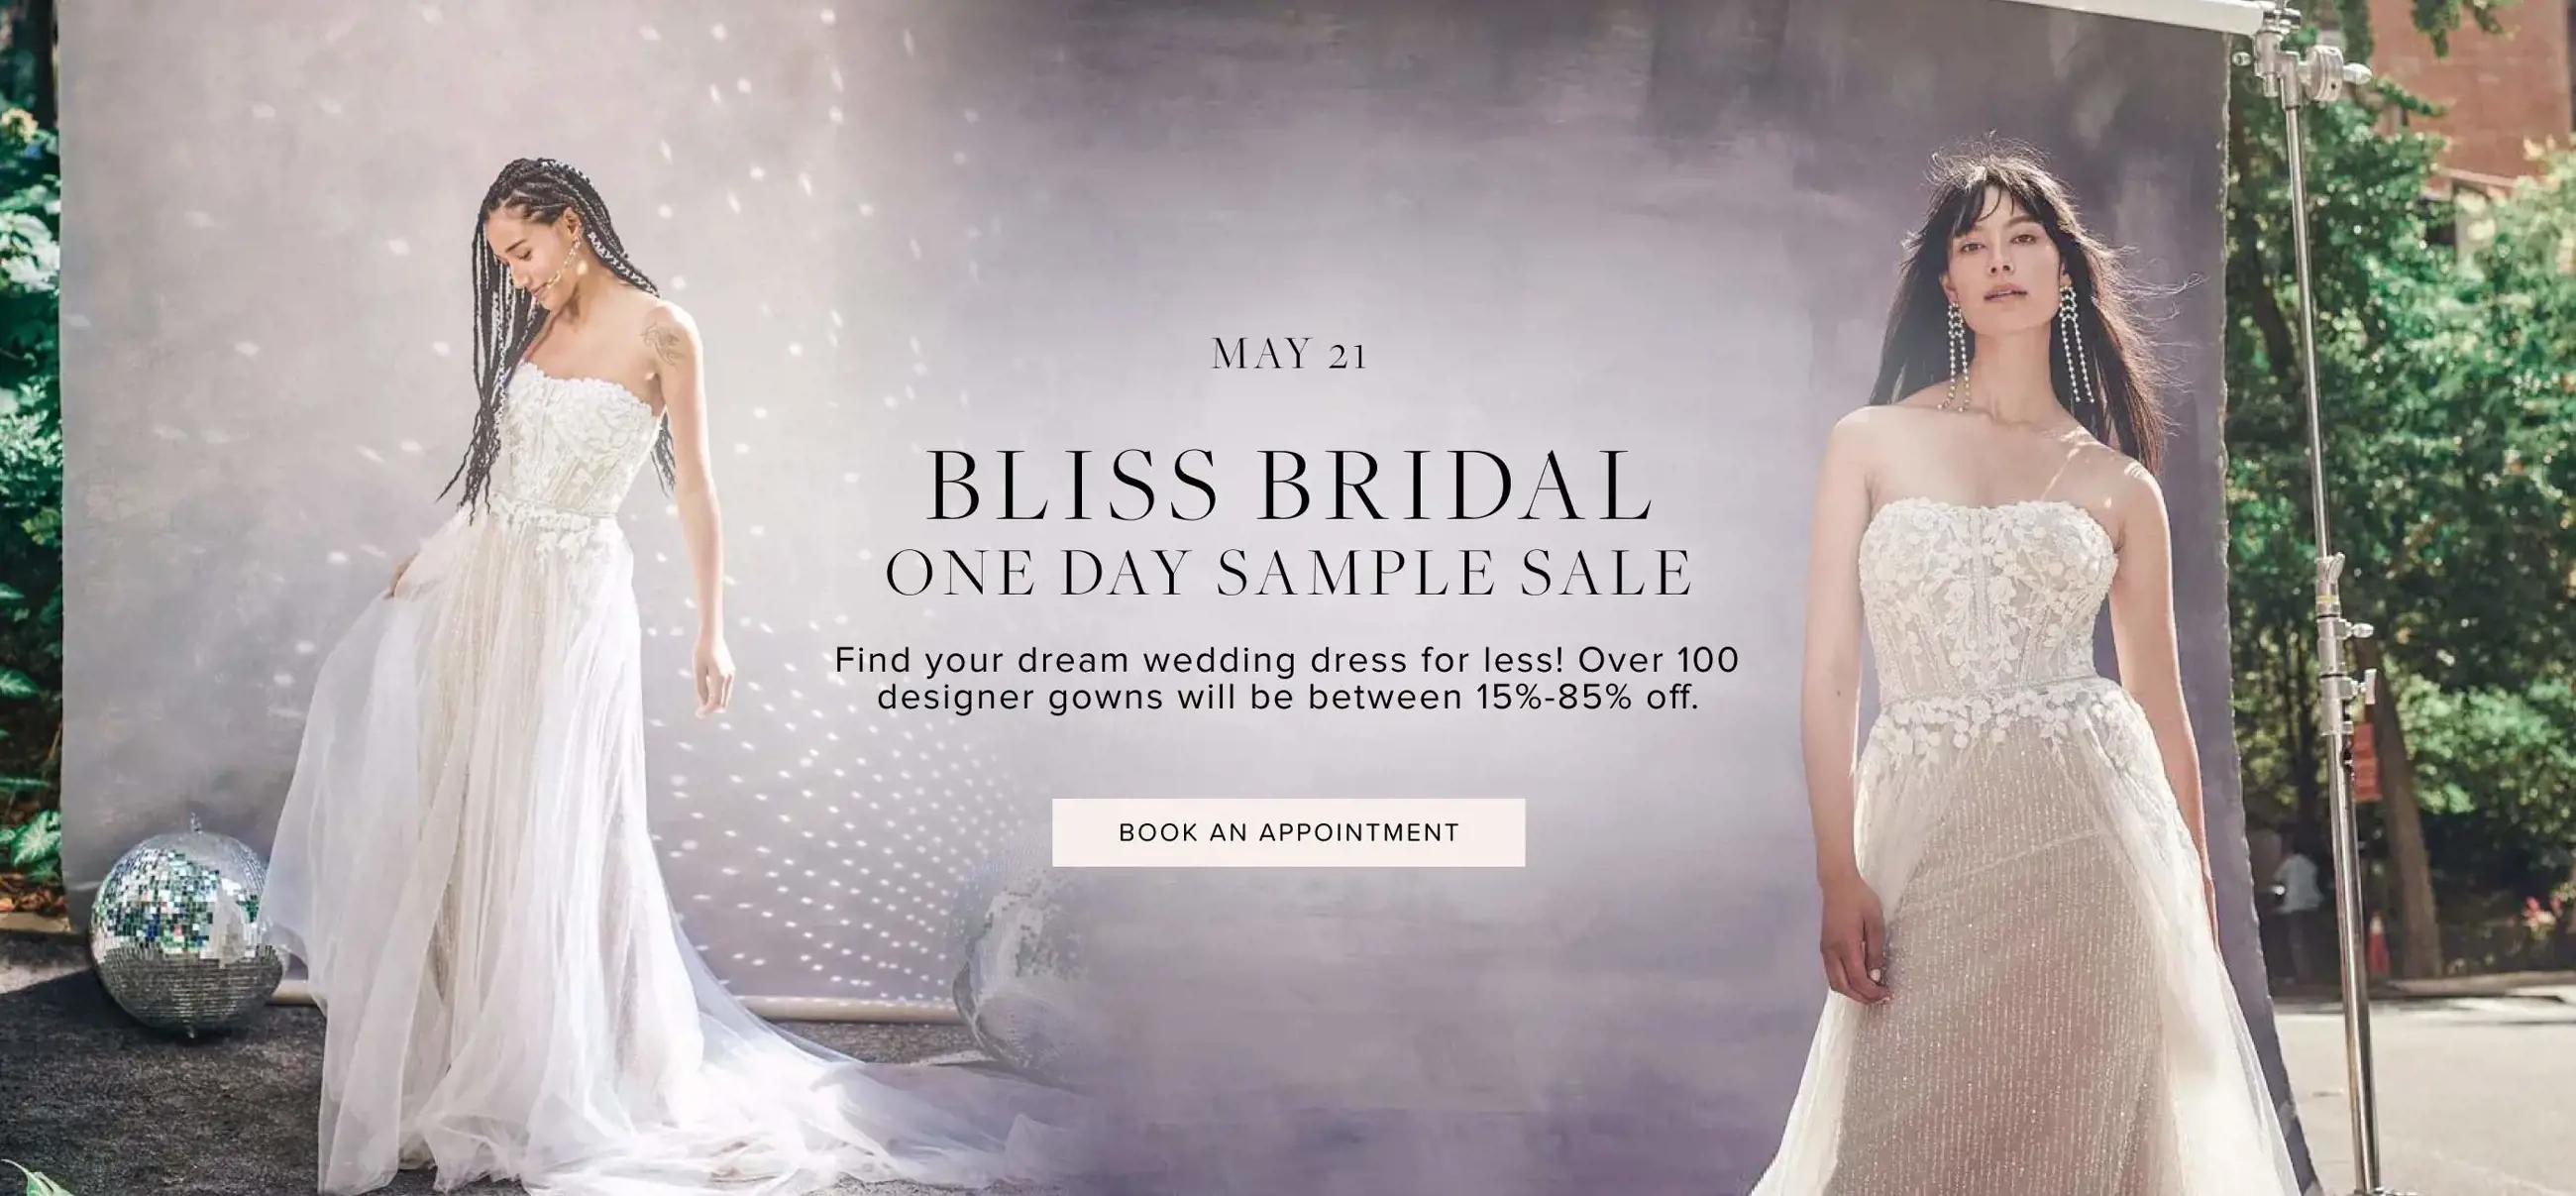 Sample sale at Bliss Bridal. Model wearing wedding dress.